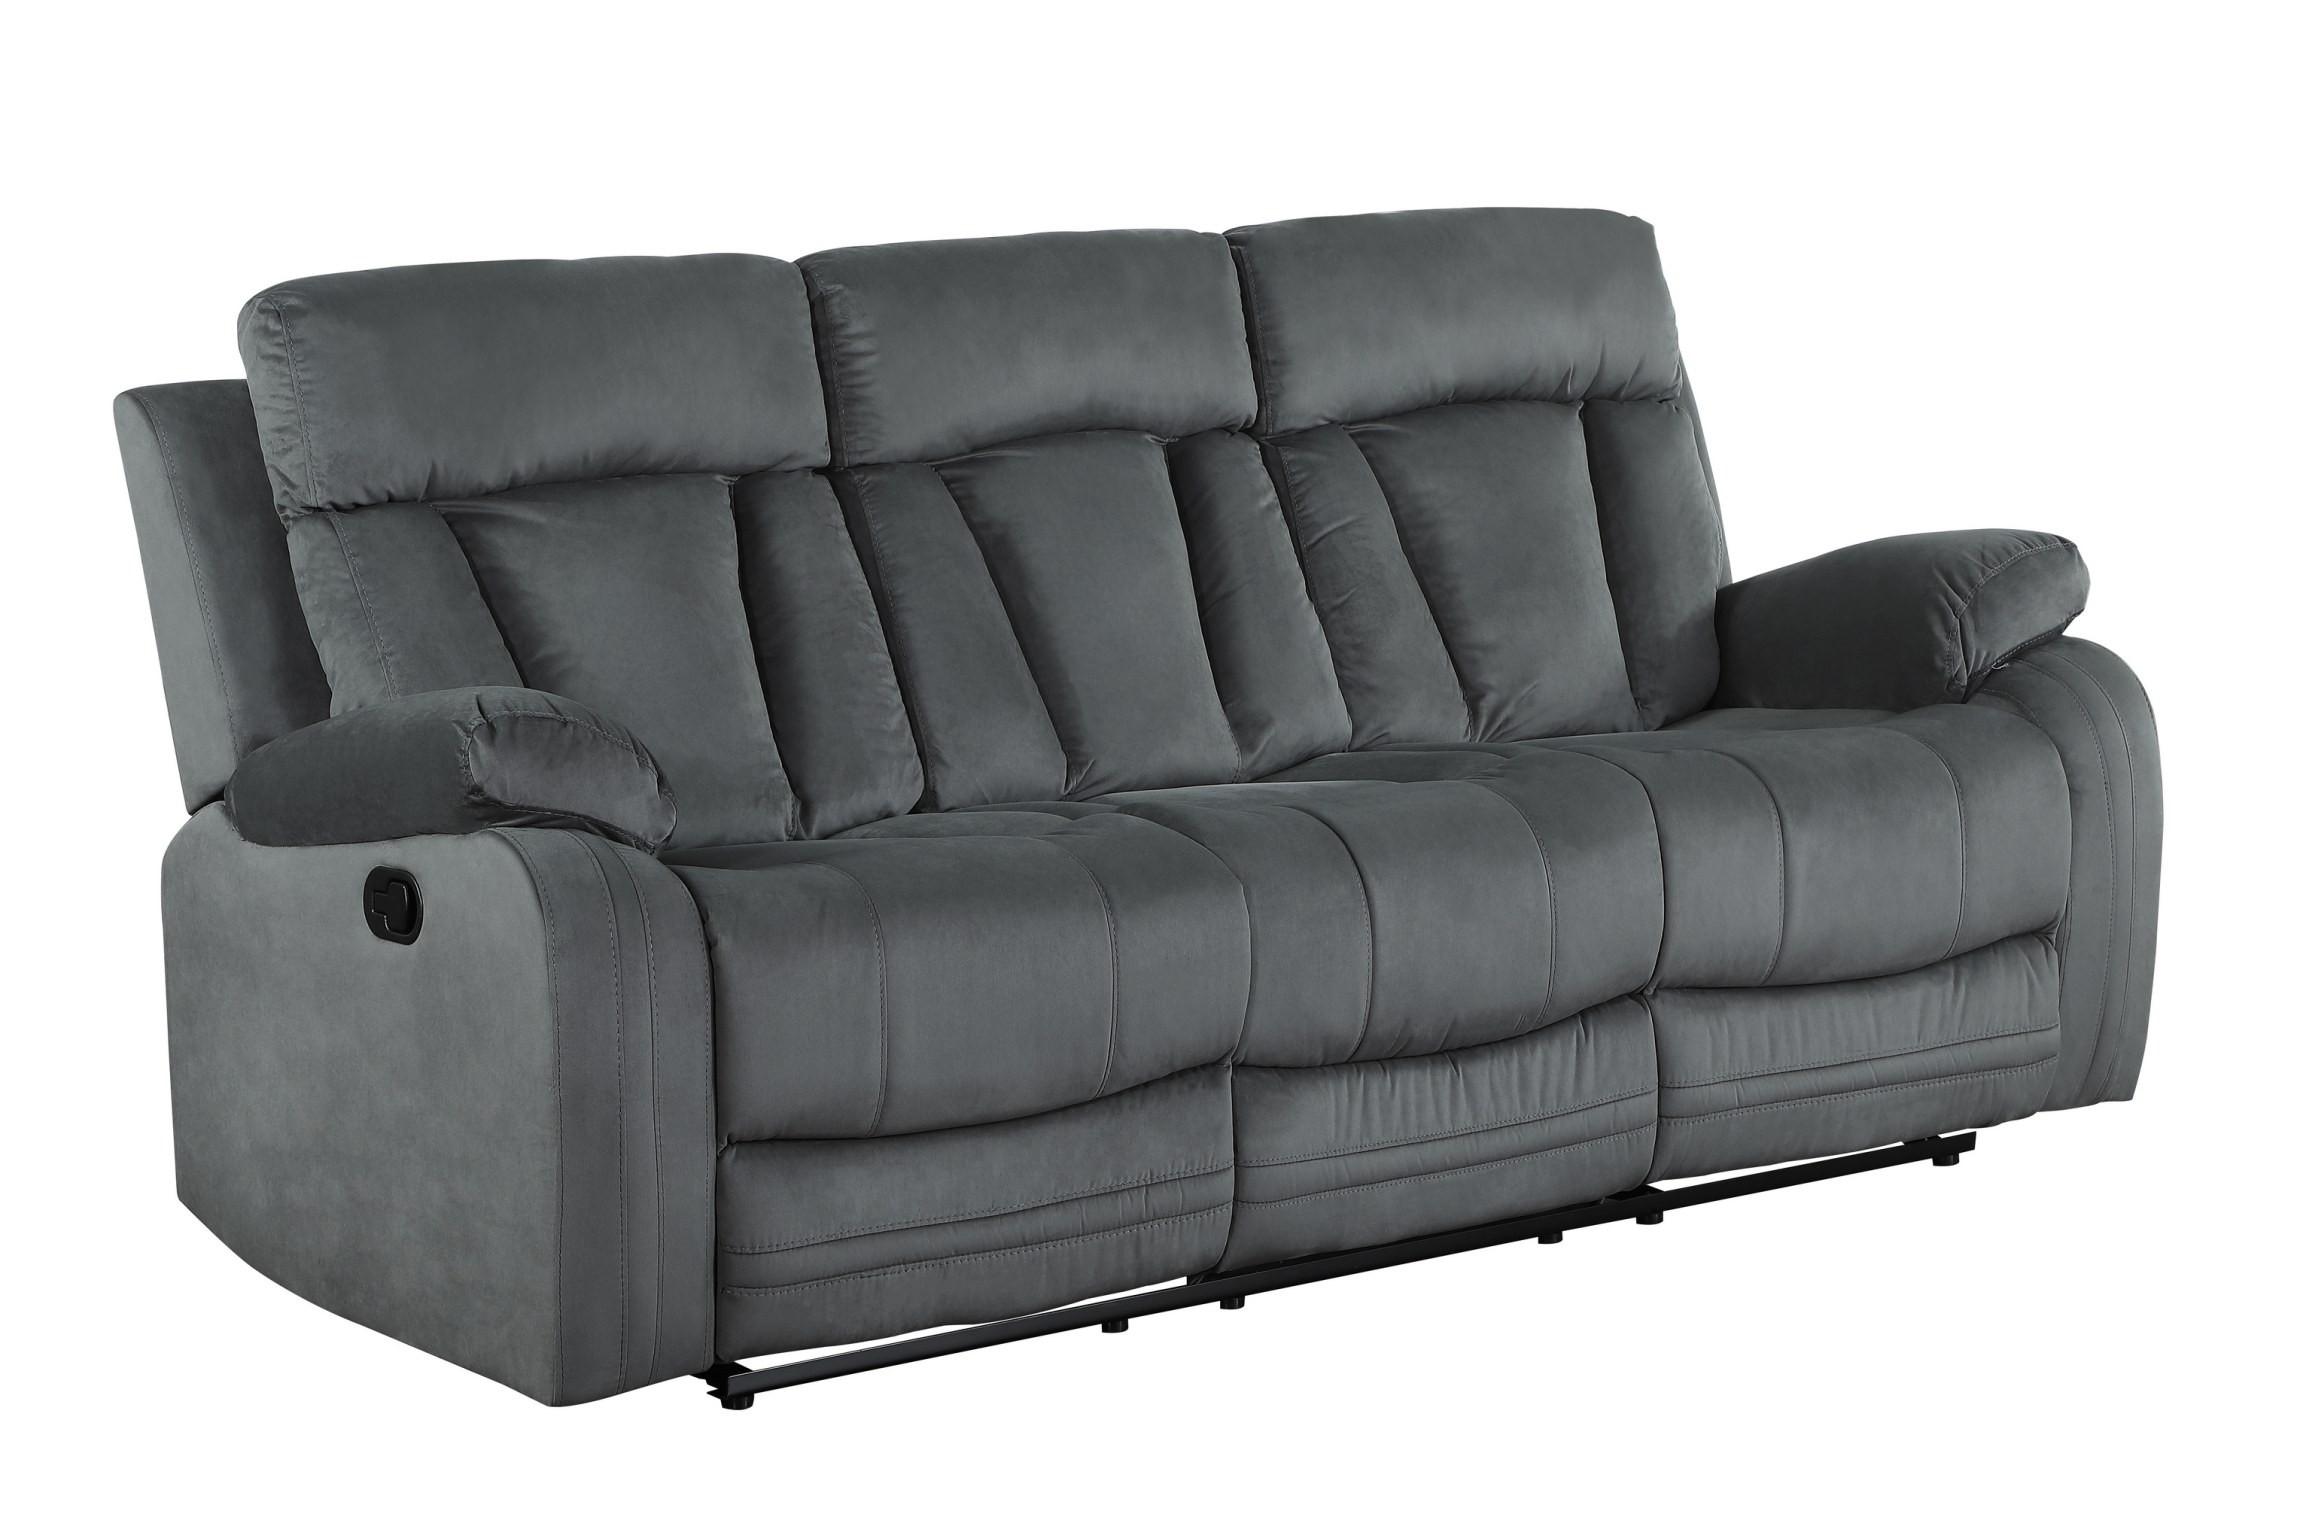 

    
Contemporary Gray Microfiber Recliner Sofa Global United 9760
